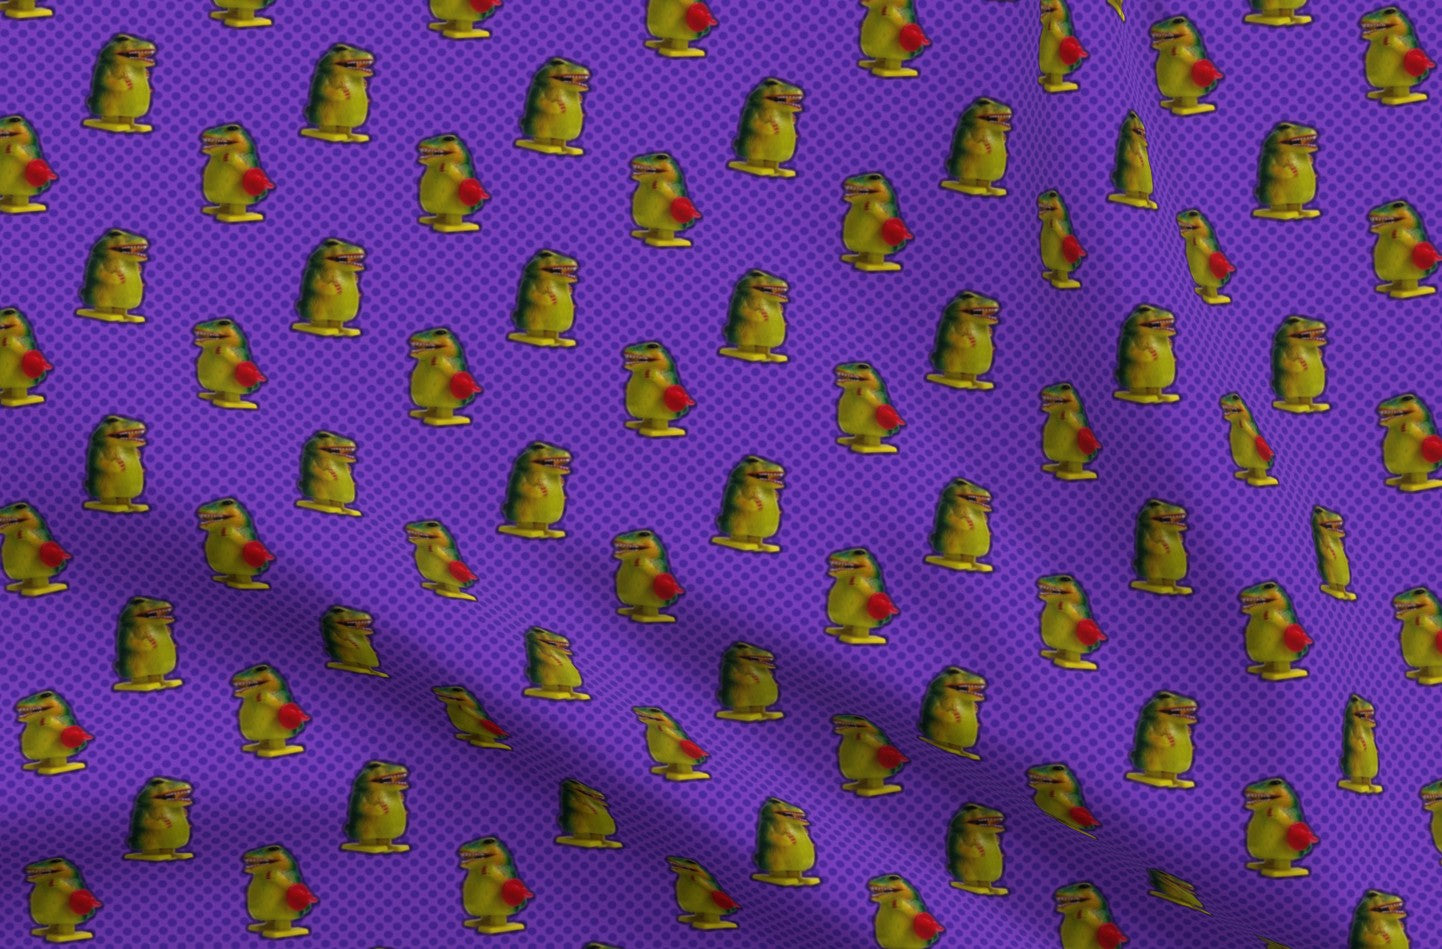 Sparky Purple Printed Fabric by Studio Ten Design